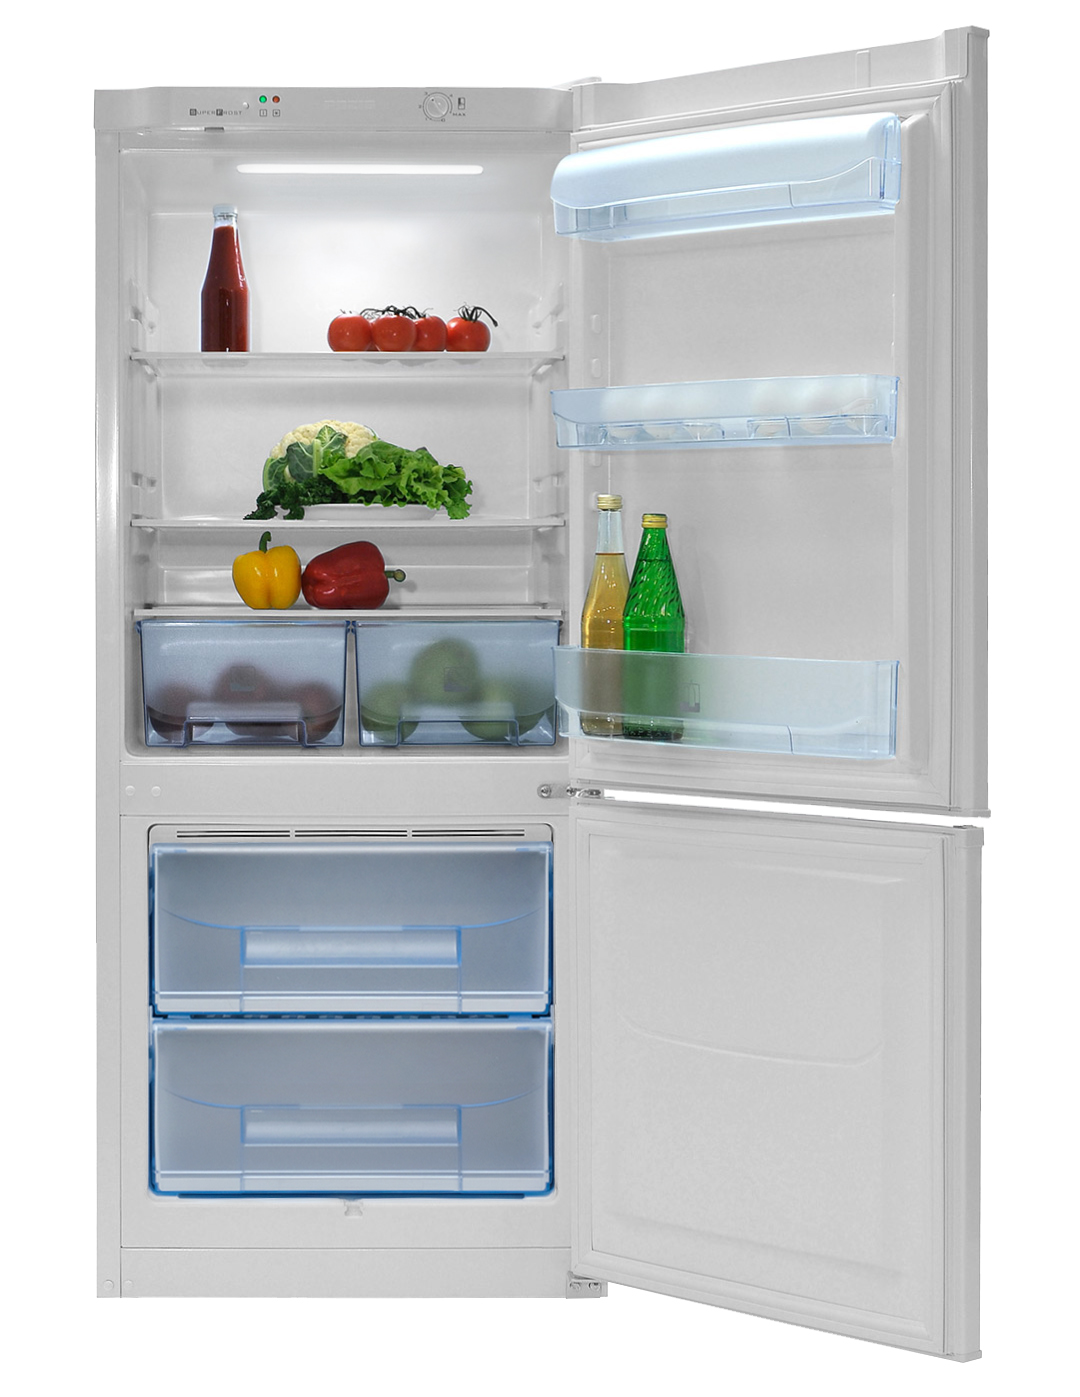 POZIS RK-101 серебристый металлопласт Холодильник